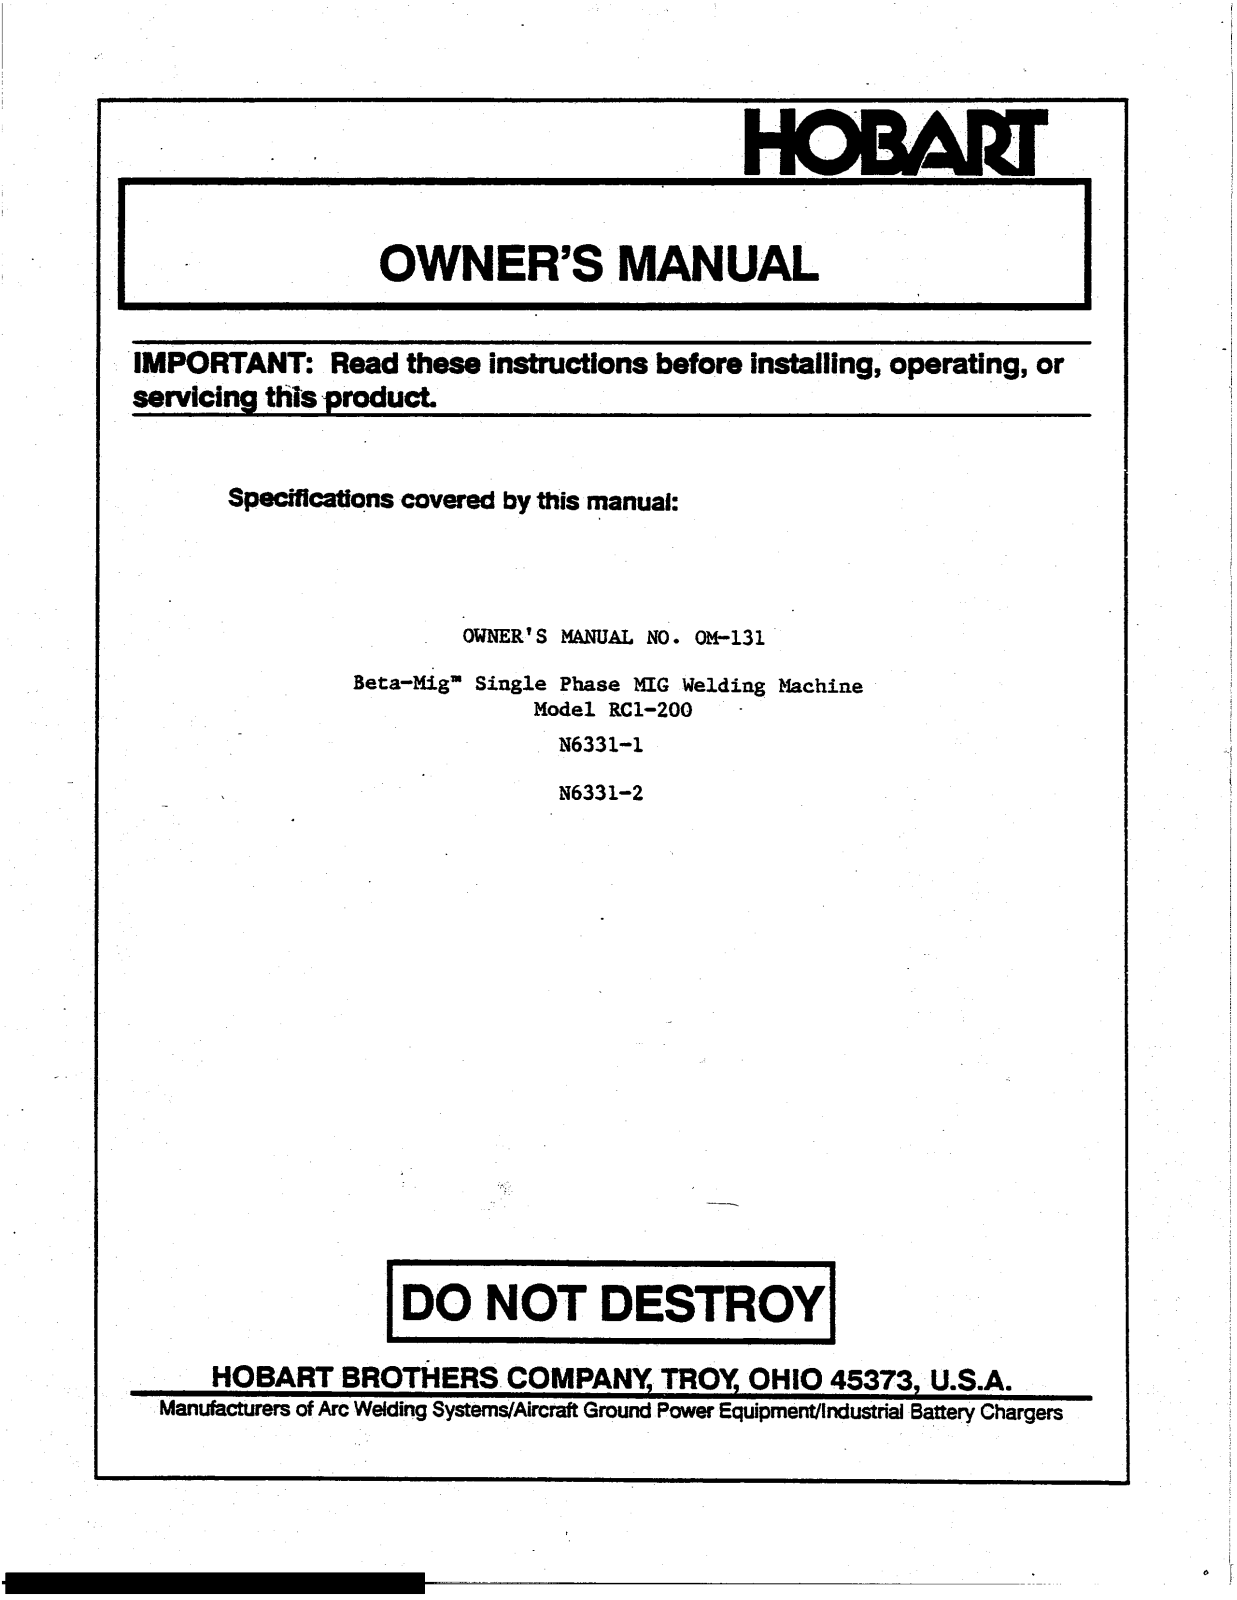 Hobart Beta-Mig 200 Owner's Manual